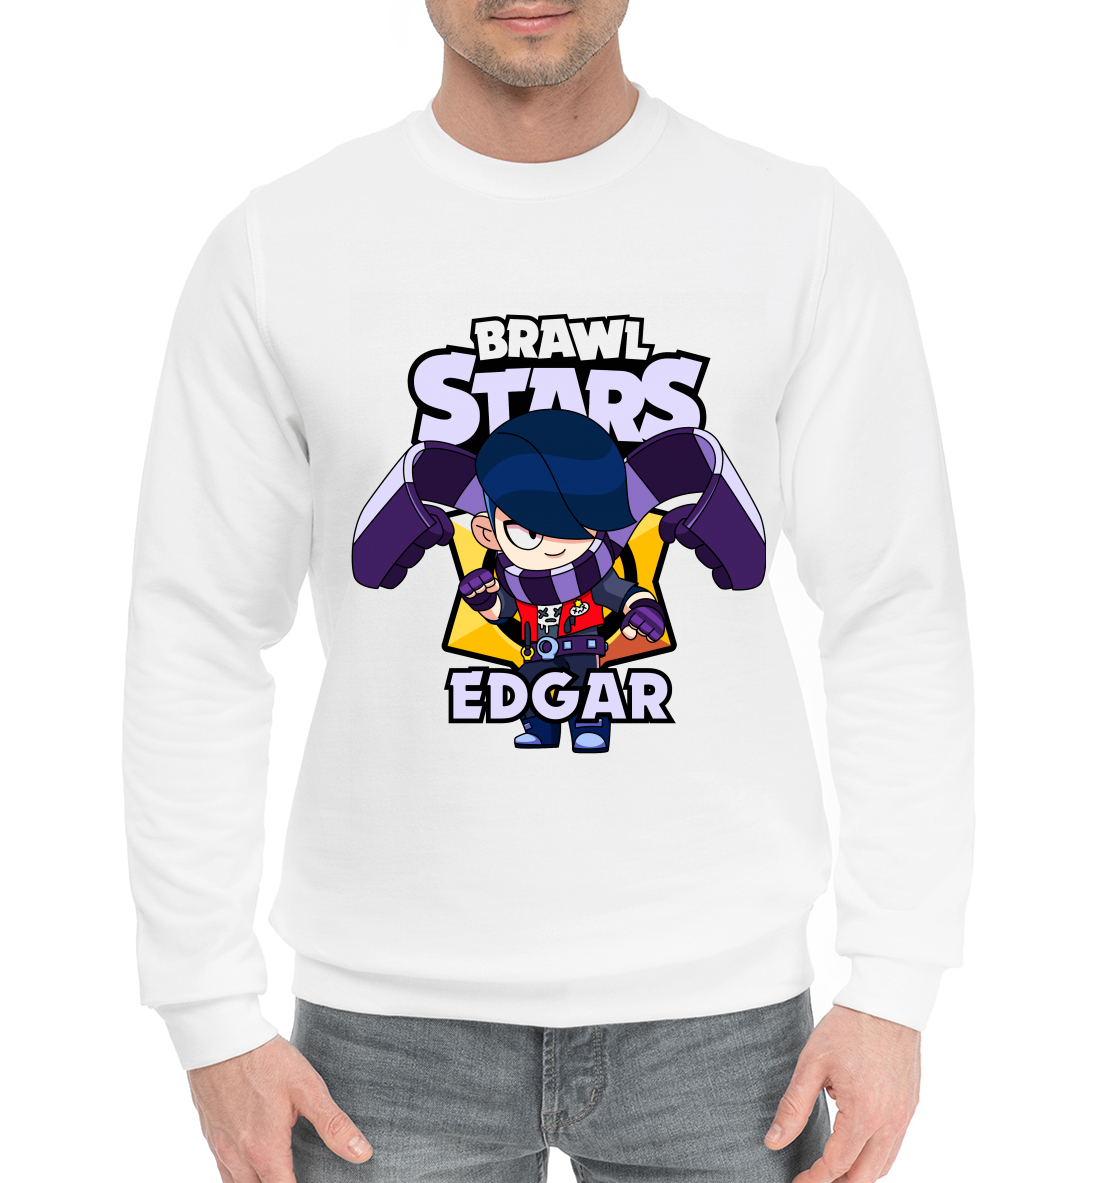 Мужской Хлопковый свитшот с принтом Brawl Stars, Edgar, артикул CLH-264605-hsw-2mp